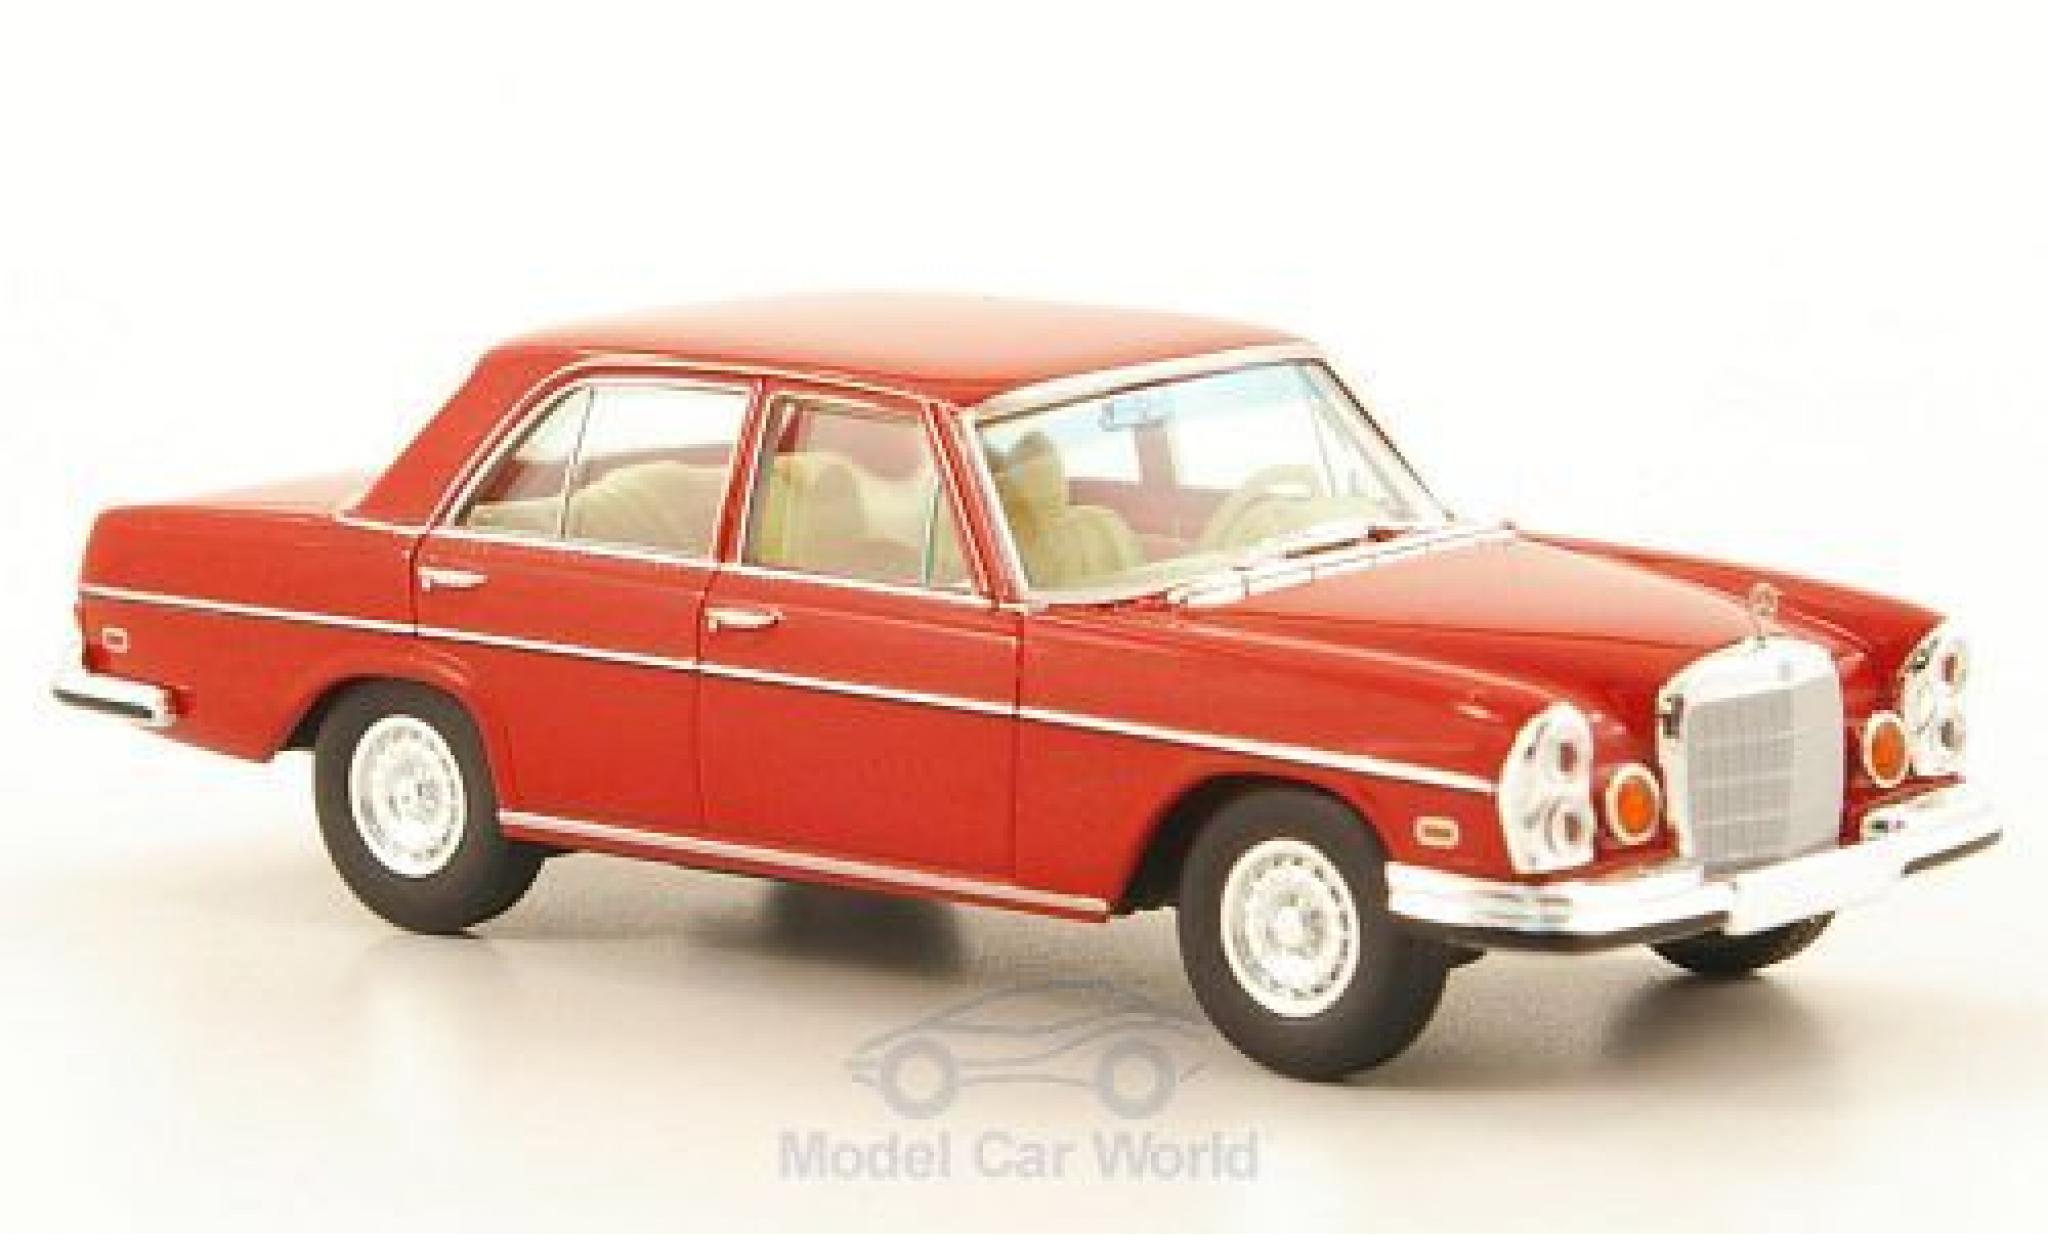 Diecast model Mercedes-Benz 280 SE (W108) (1968), scale 1:18, Norev